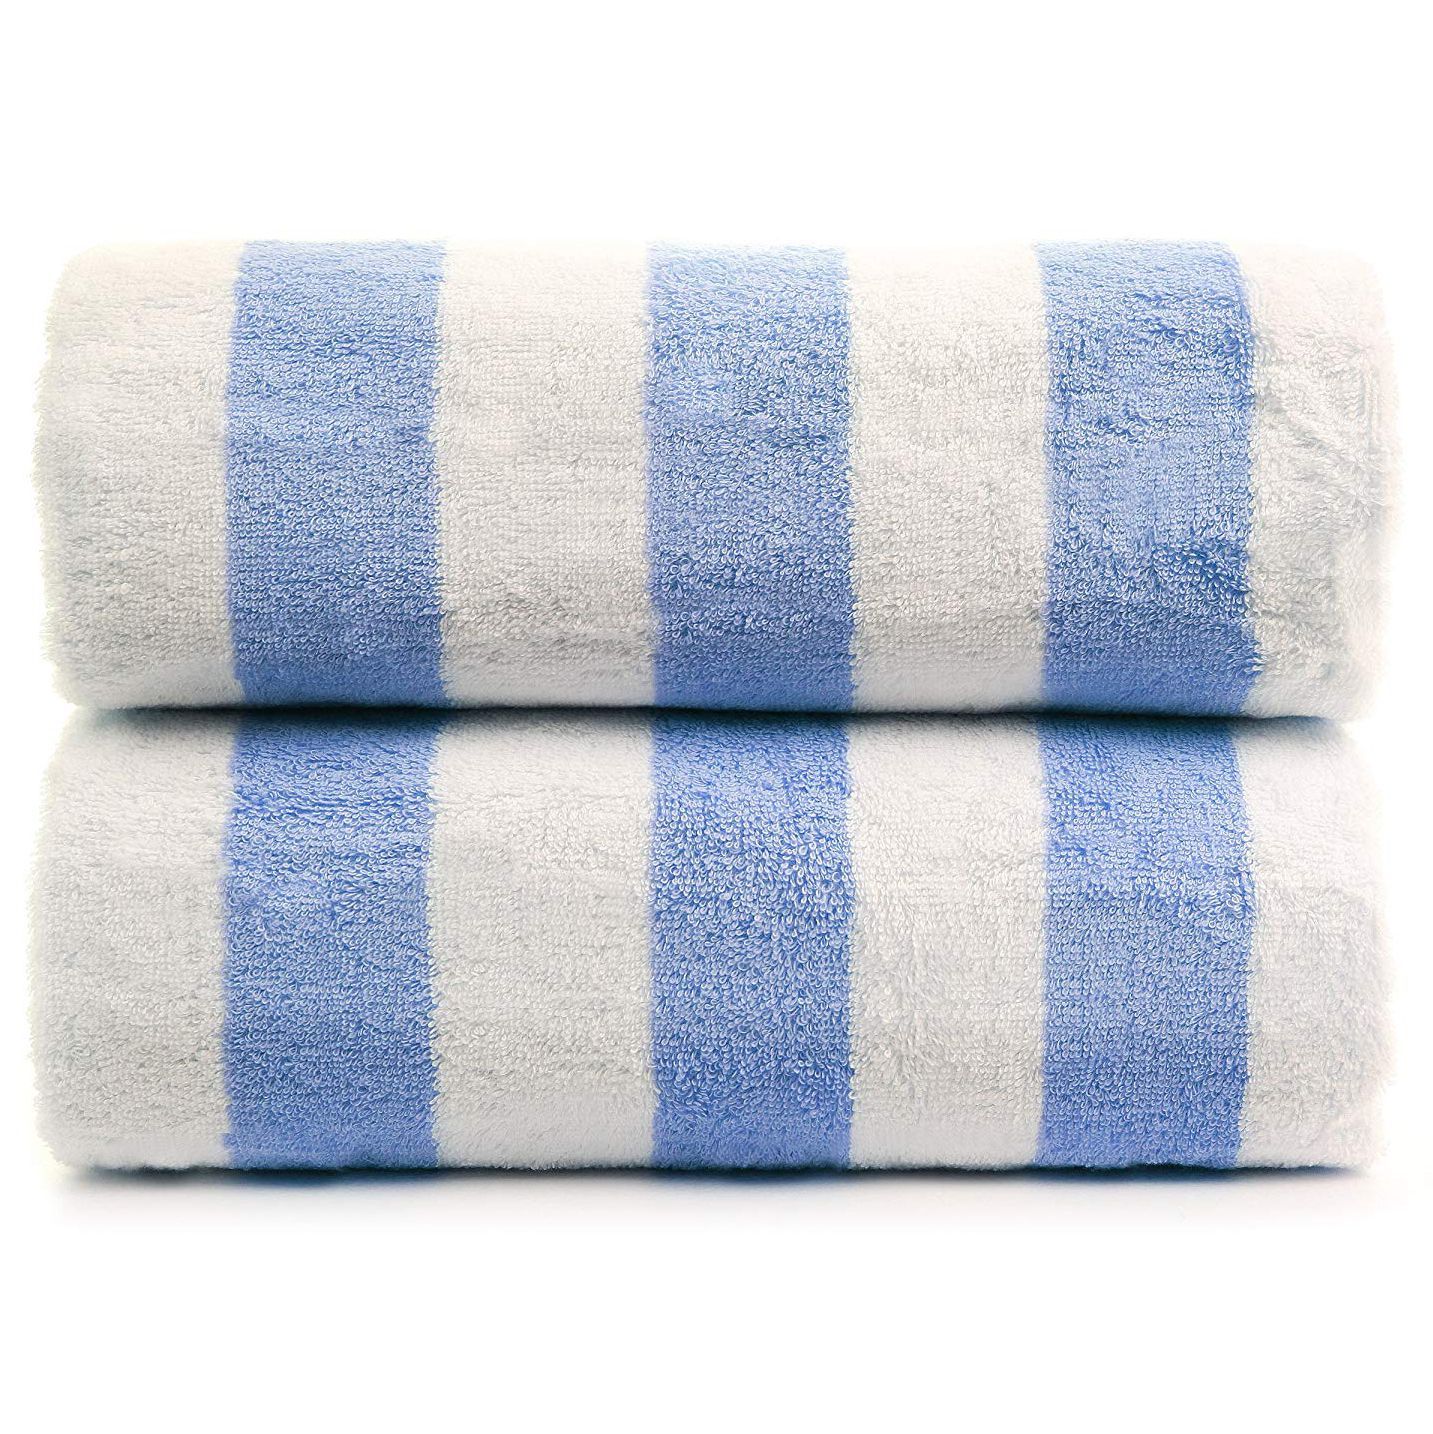 Striped Cotton Beach Towels